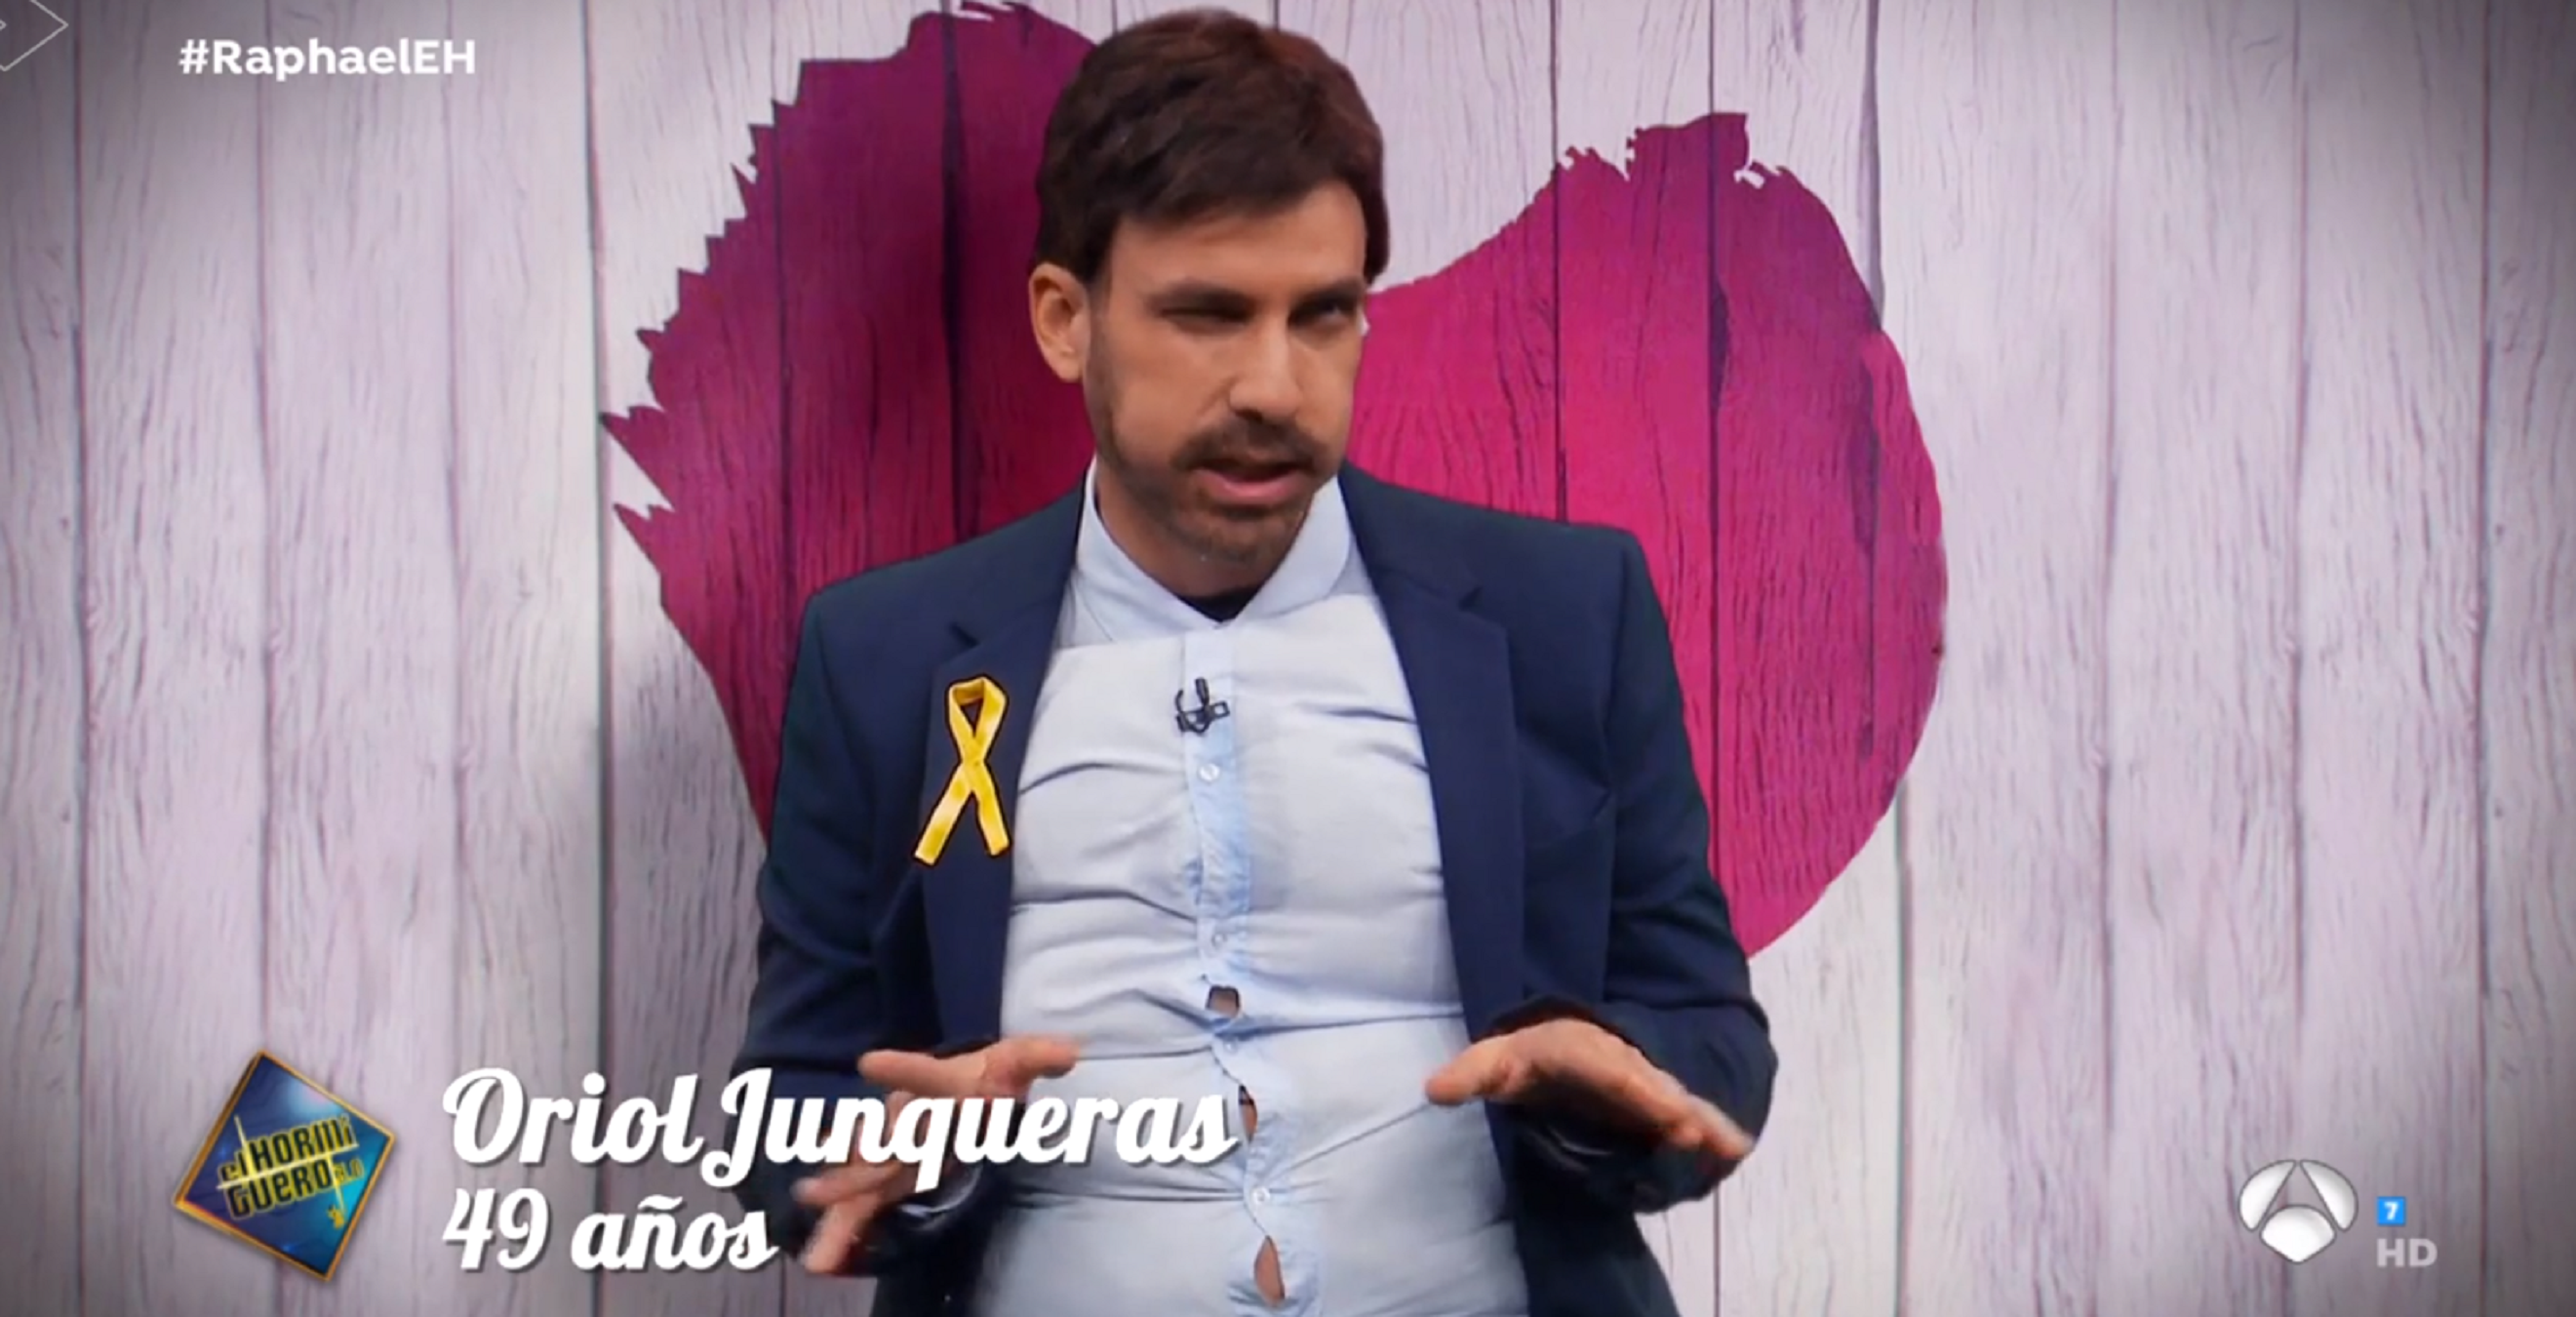 'El hormiguero' fa una imitació lamentable d'Oriol Junqueras a la presó